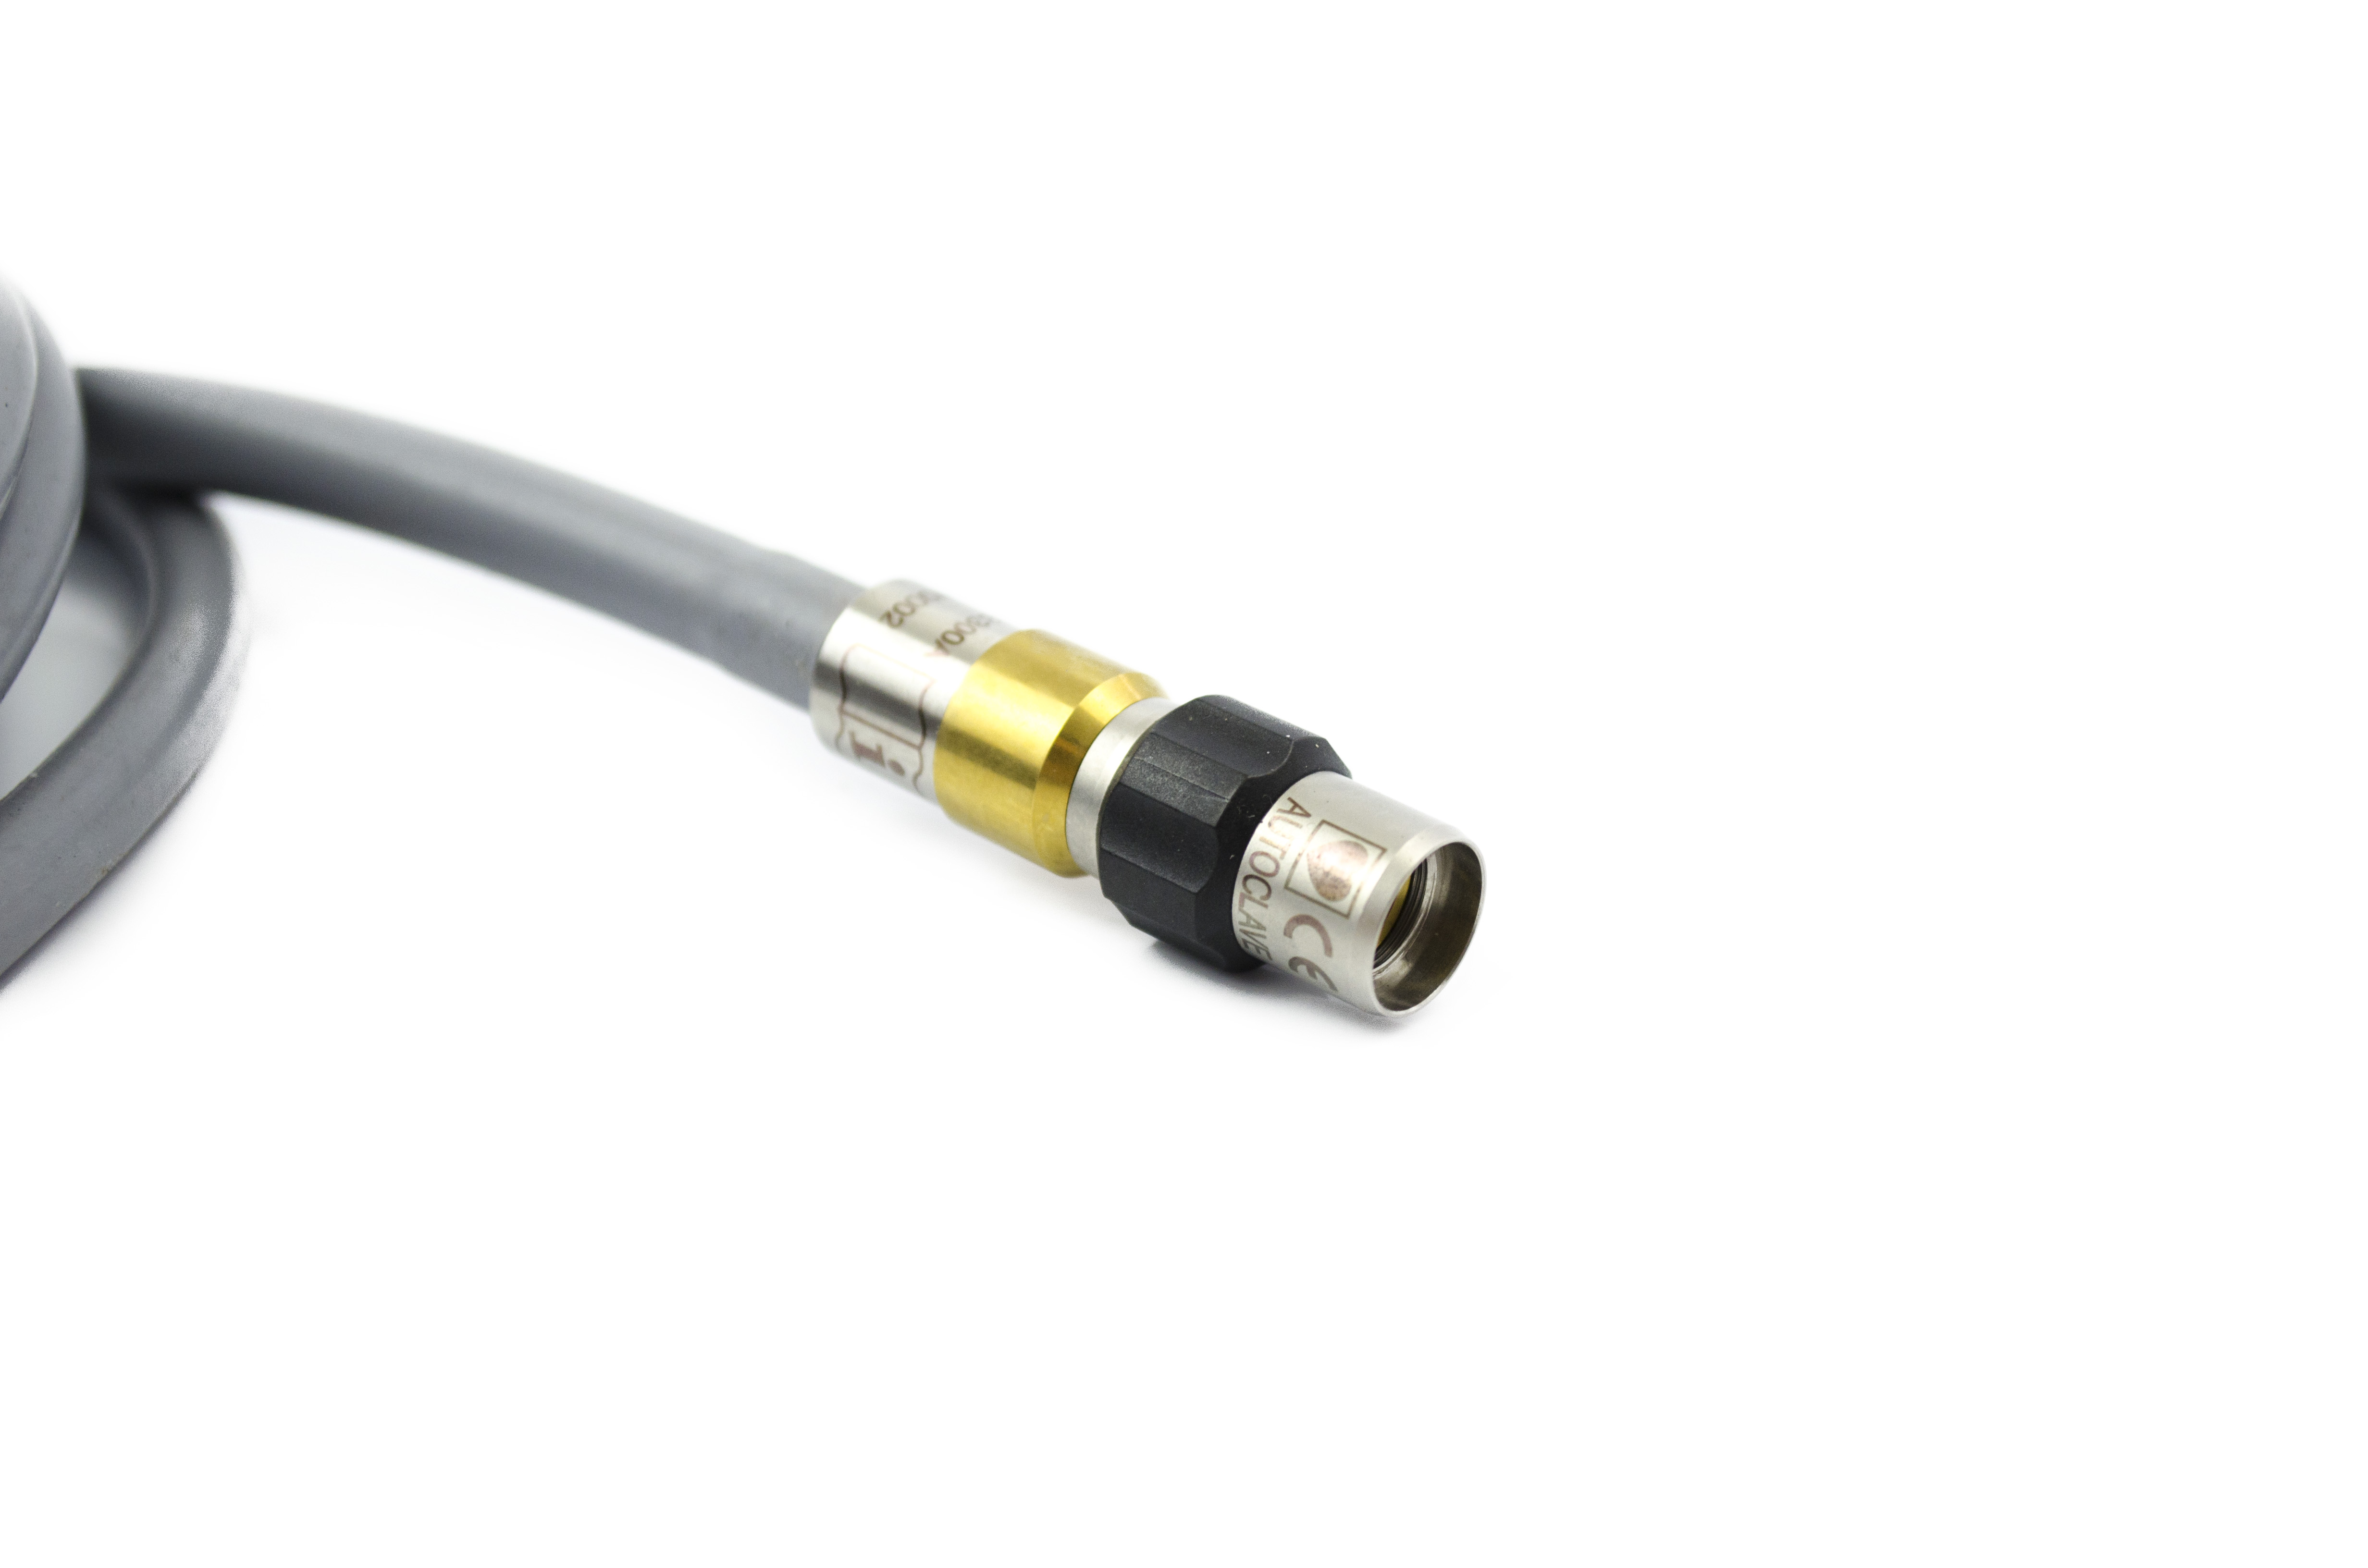 Olympus Fiber Optic Light Guide Cable - WA03300A (Original Packaging)